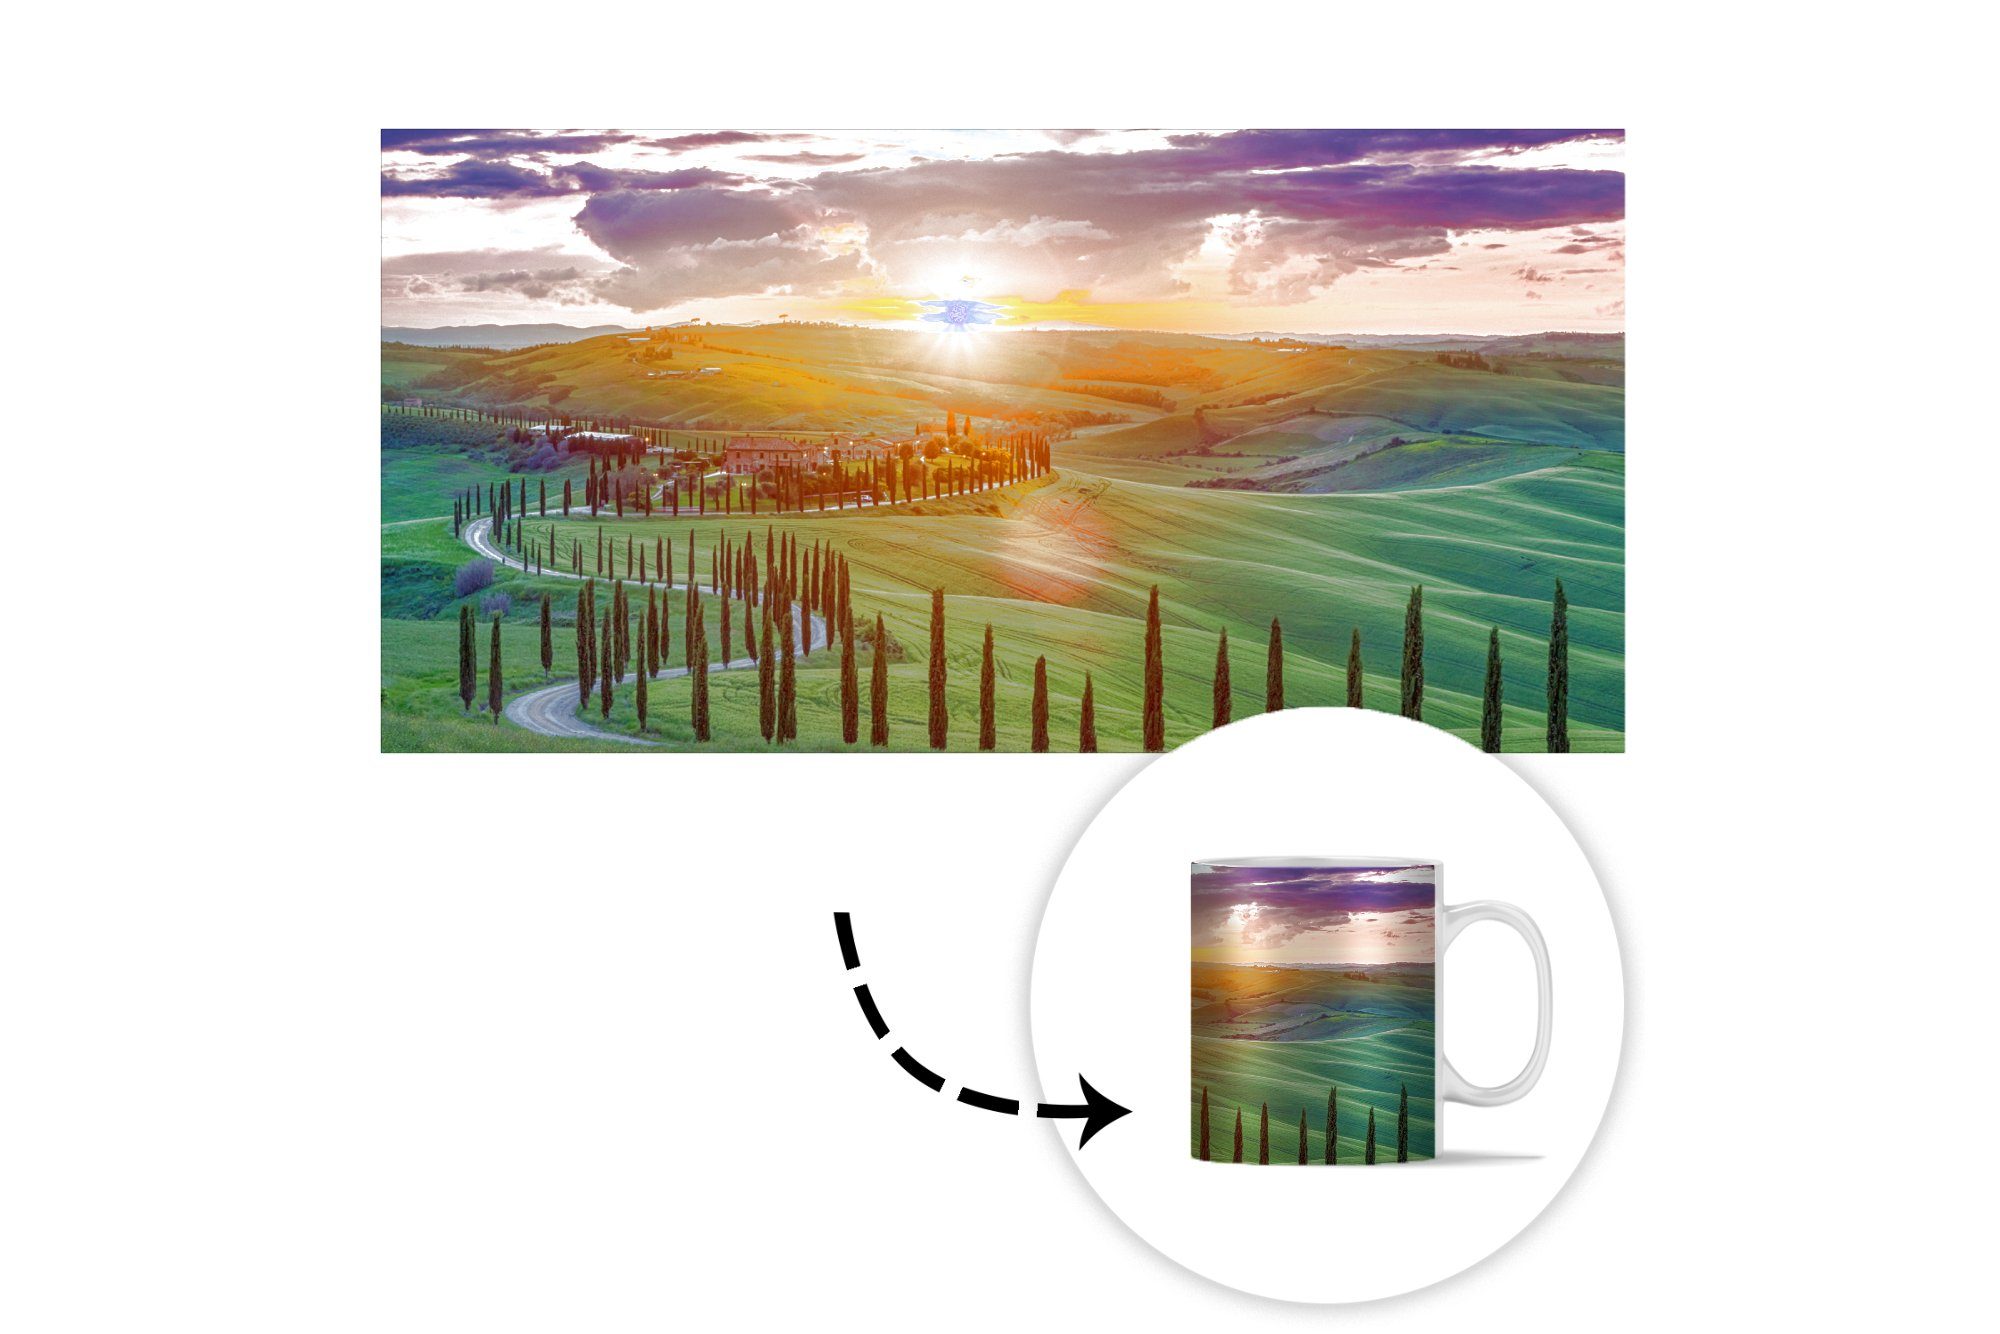 MuchoWow Tasse Teetasse, - Becher, Geschenk Keramik, Teetasse, Italien Kaffeetassen, - Sonnenuntergang Toskana